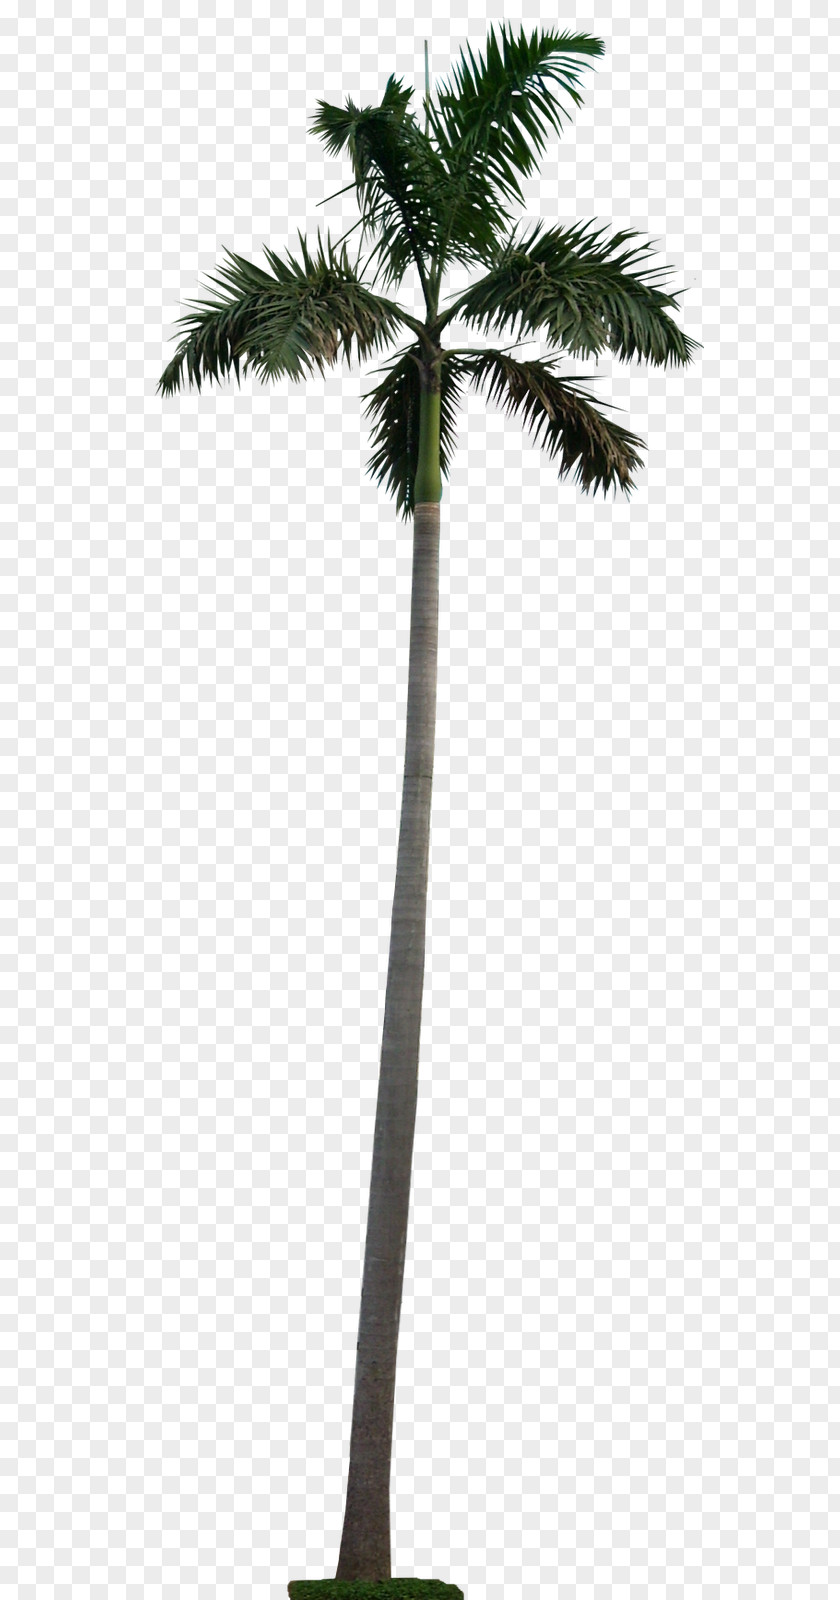 Blue Latan Palm Tree Image Adonidia Washingtonia Filifera PNG